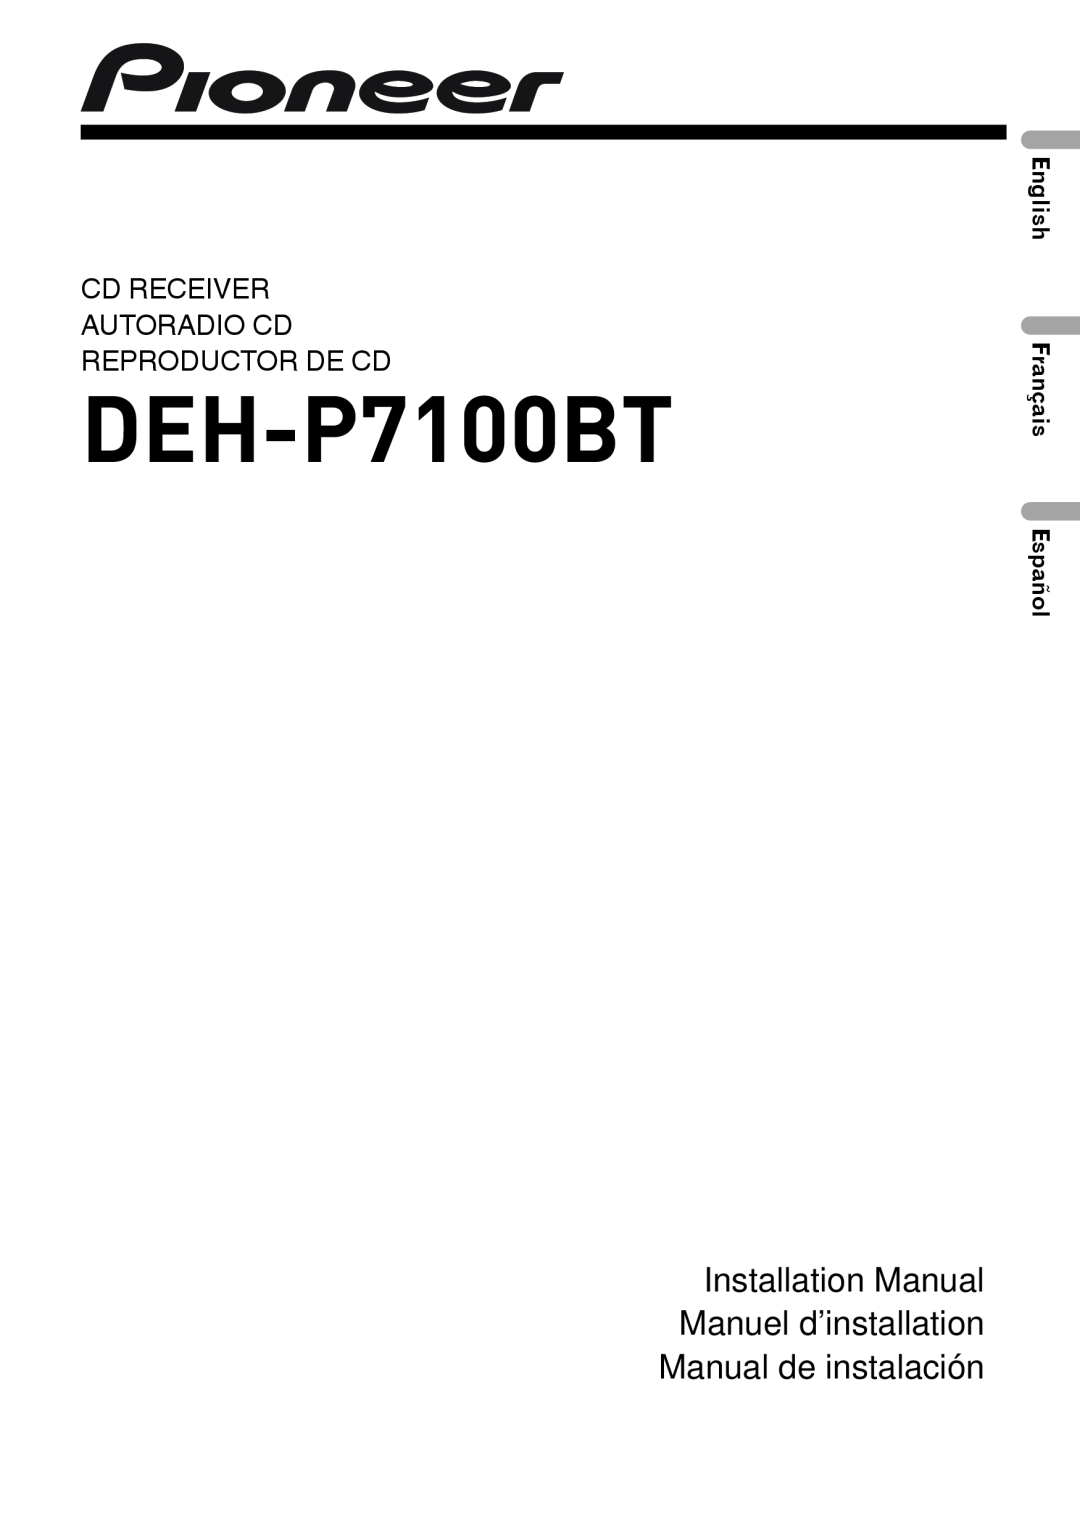 Pioneer DEH-P7100BT installation manual English Français Español, Cd Receiver Autoradio Cd Reproductor De Cd 